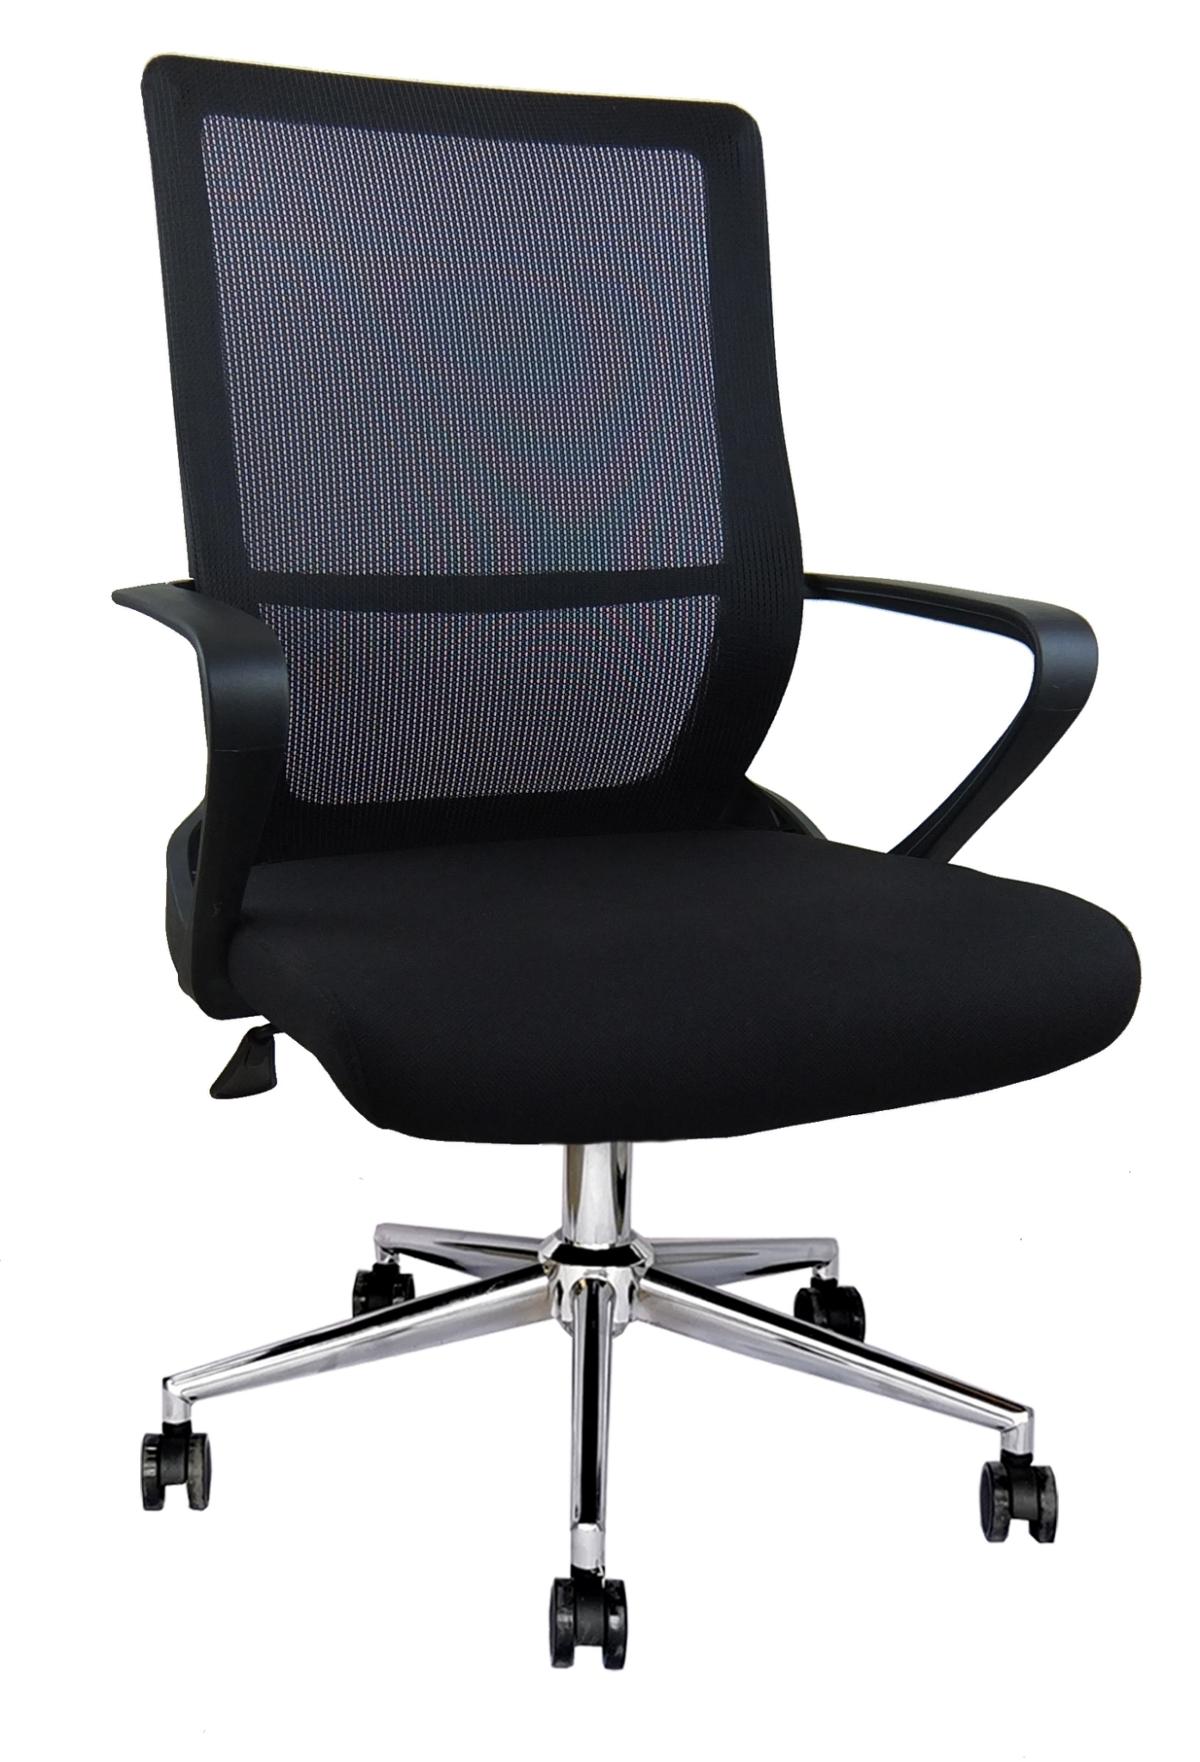 Super chair เก้าอี้สำนักงาน รุ่น ERGO 730M